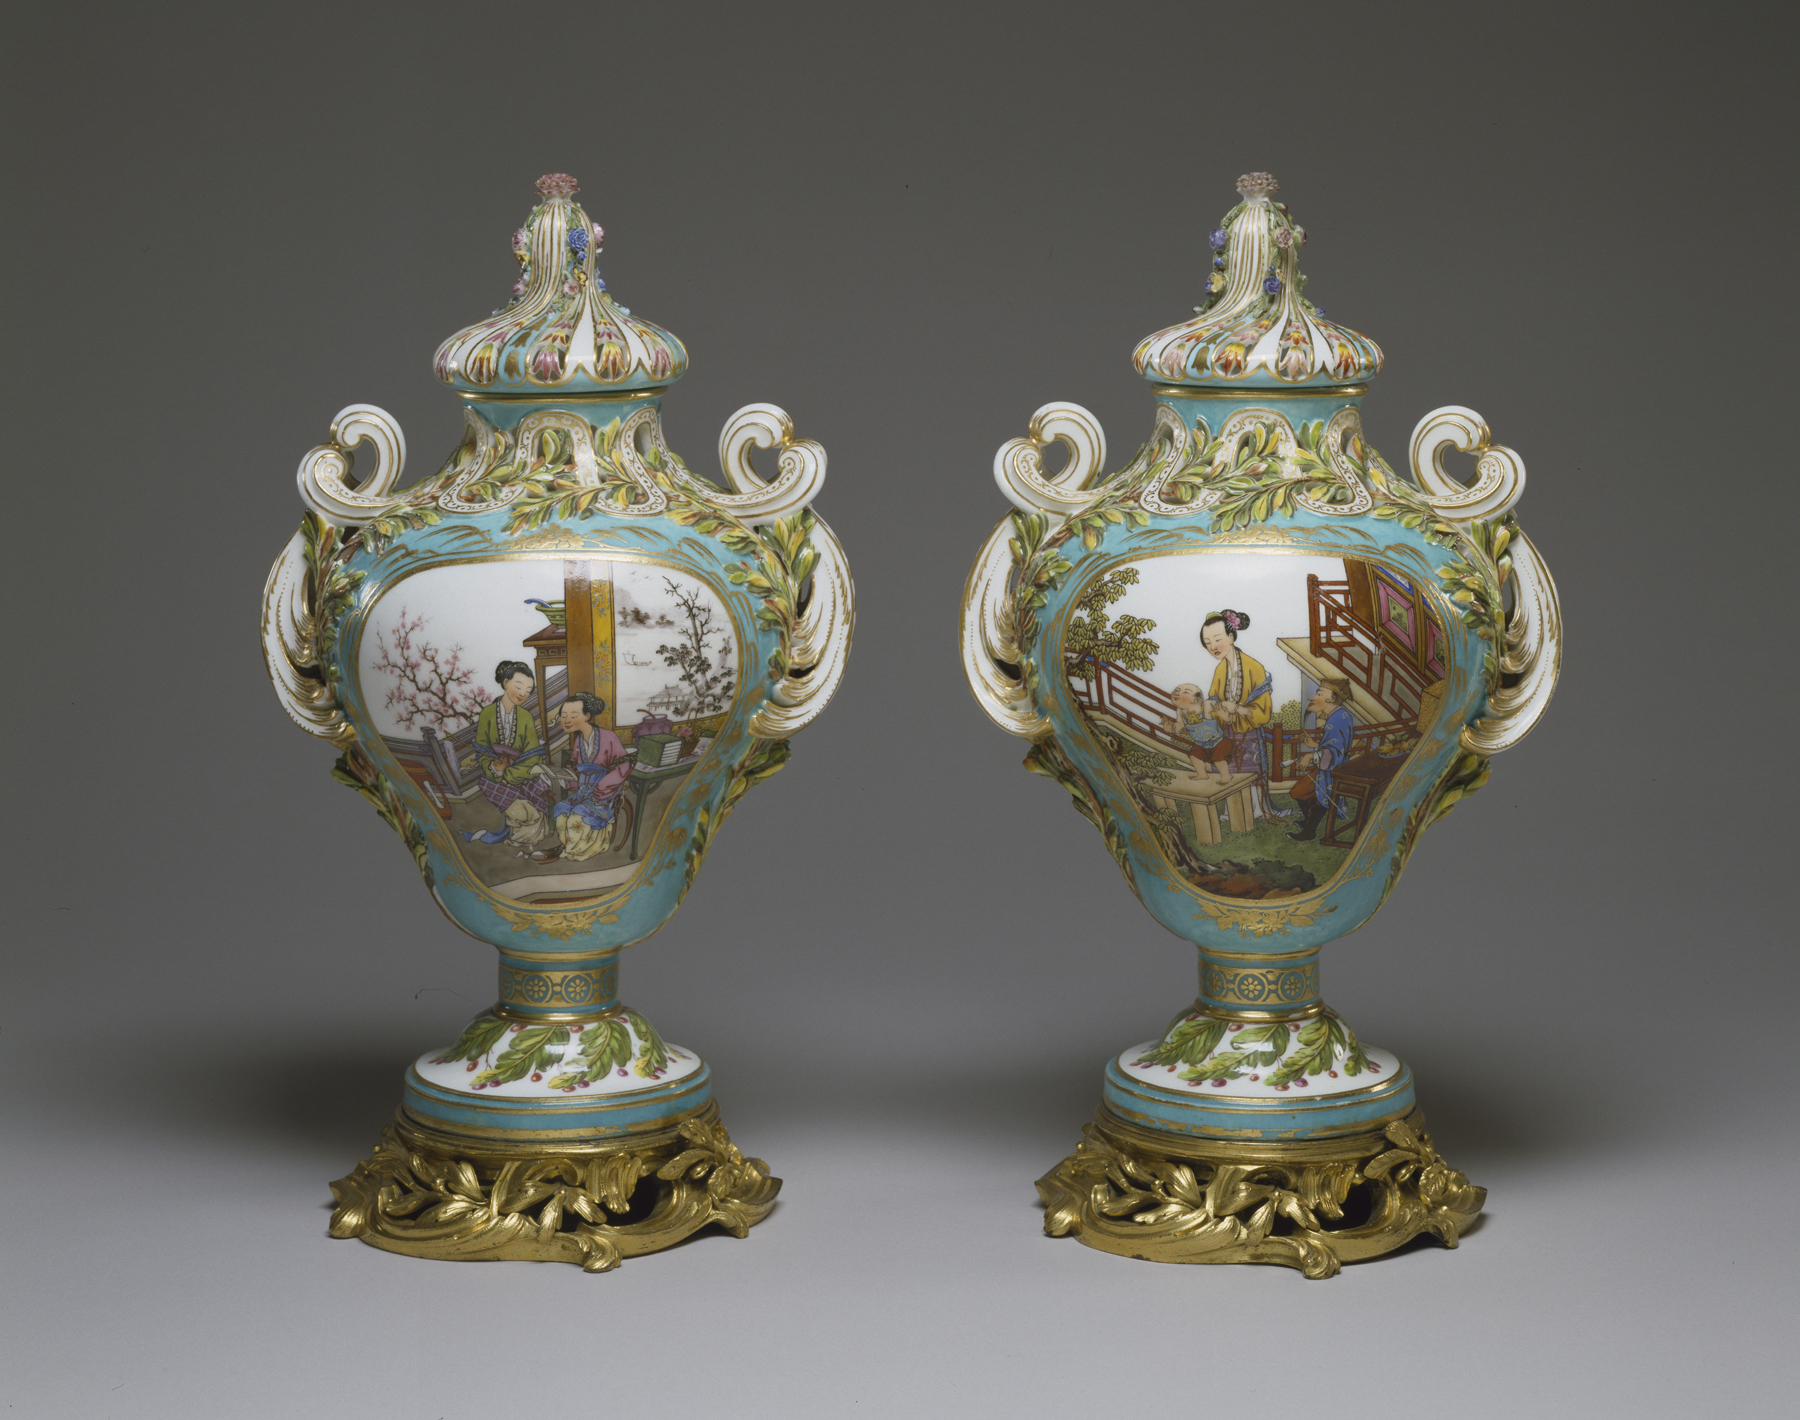 Image for Pair of Potpourri Vases (Vases pot pourri feuilles de mirte)